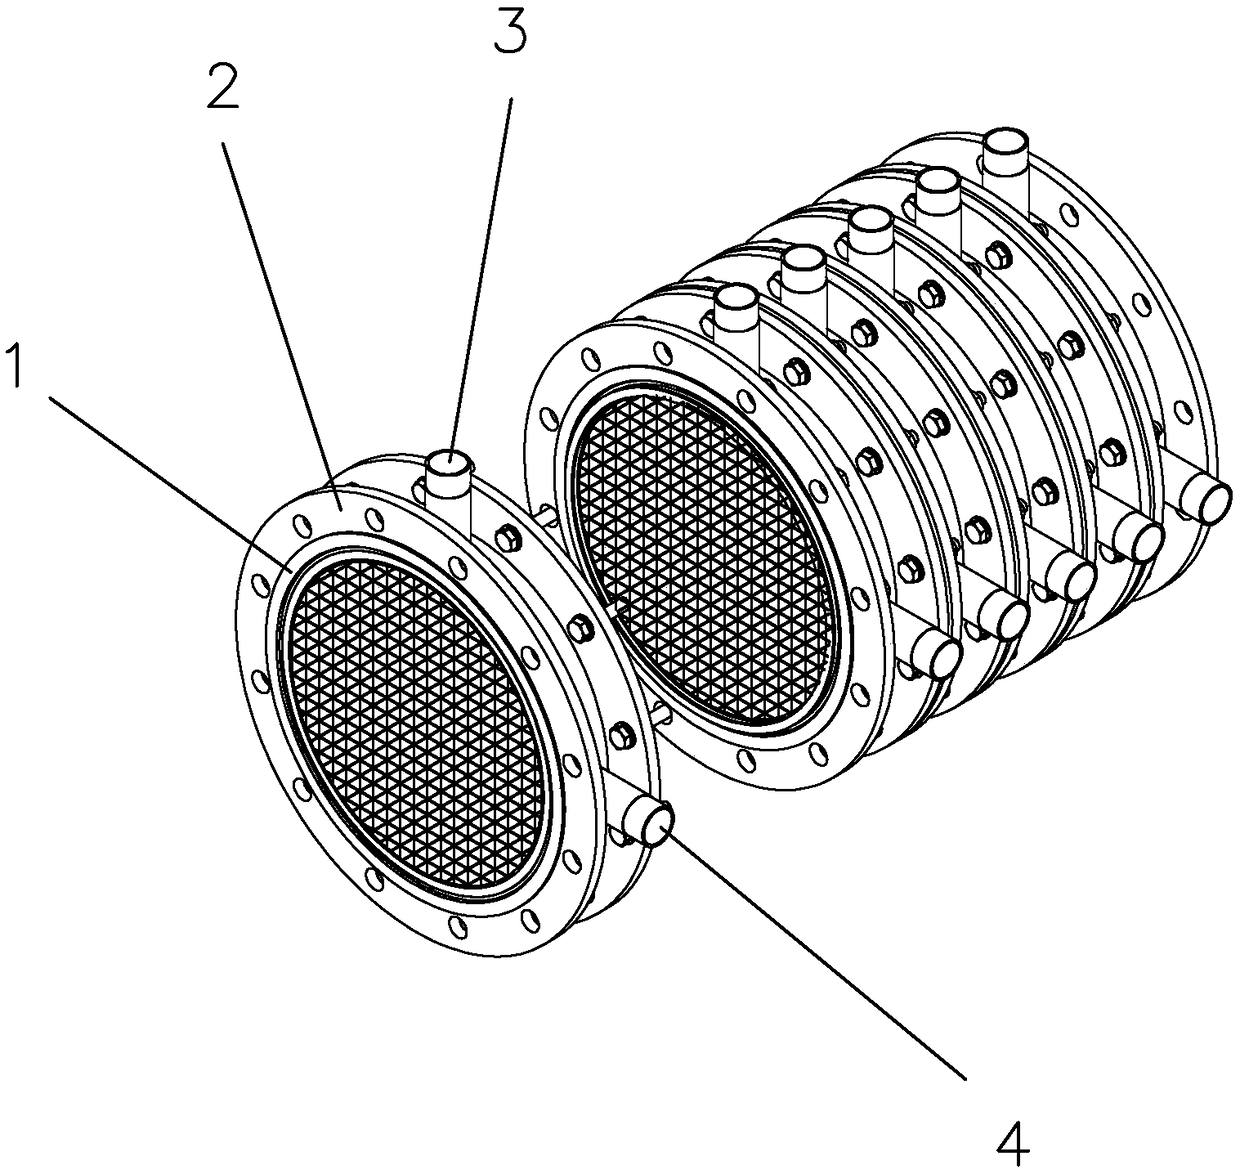 A water-regulated porous medium pulse isovolumic burner